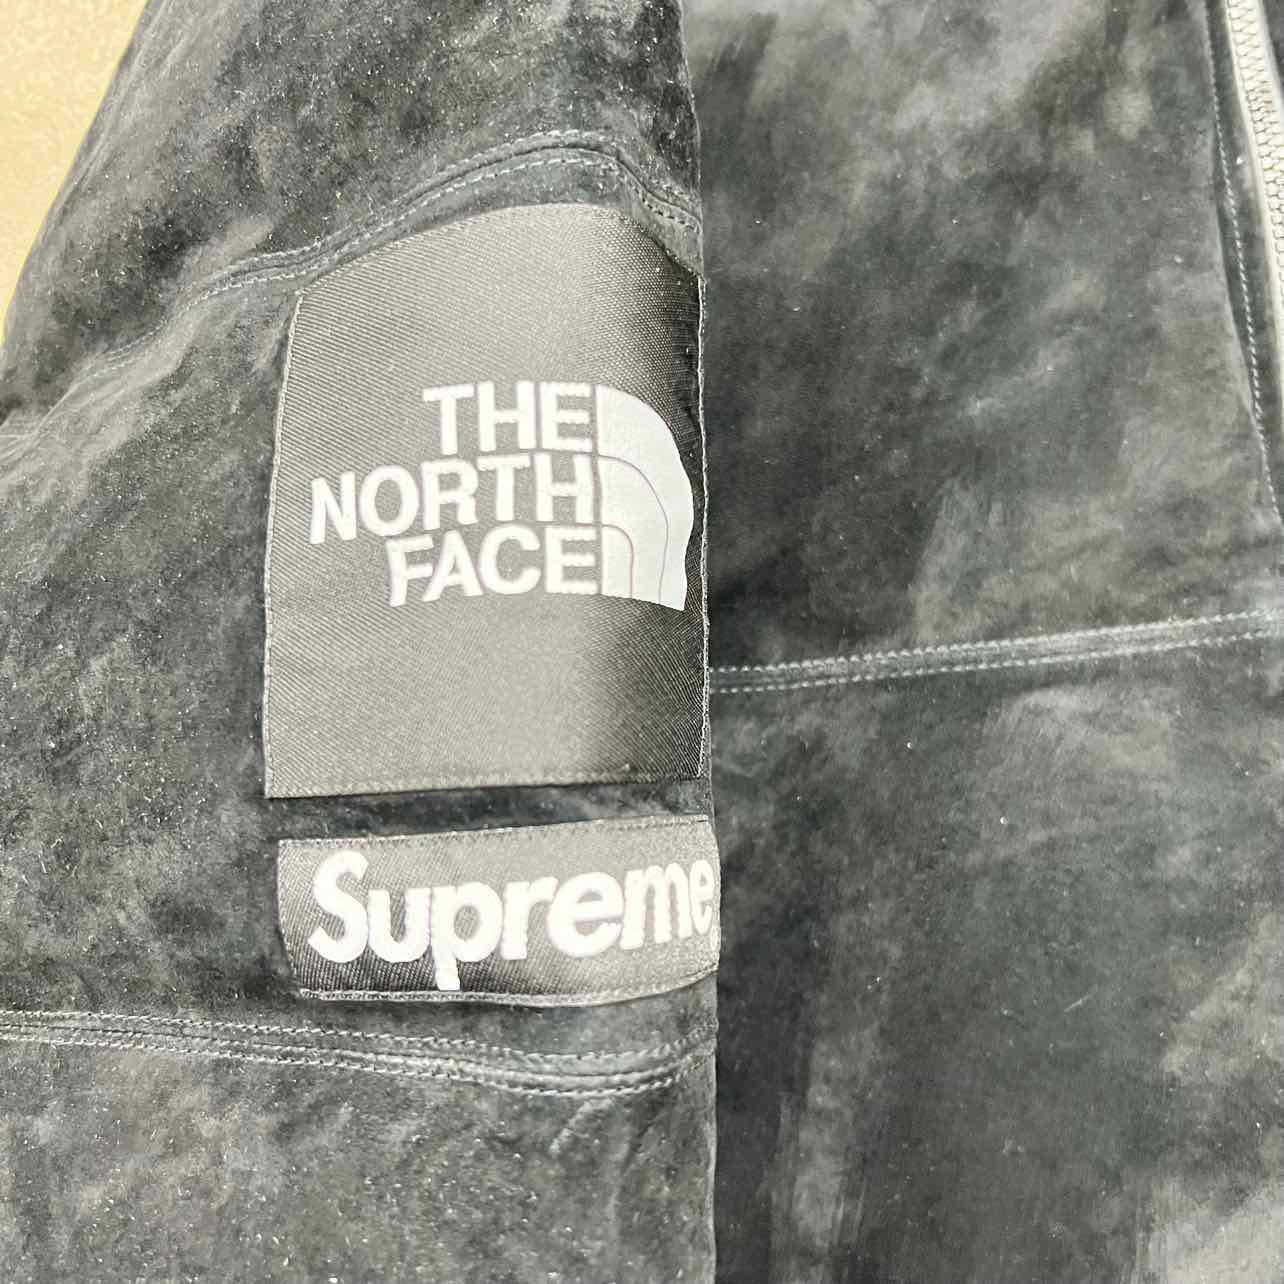 Supreme Jacket "SUEDE NUPSTE" Black New Size XL